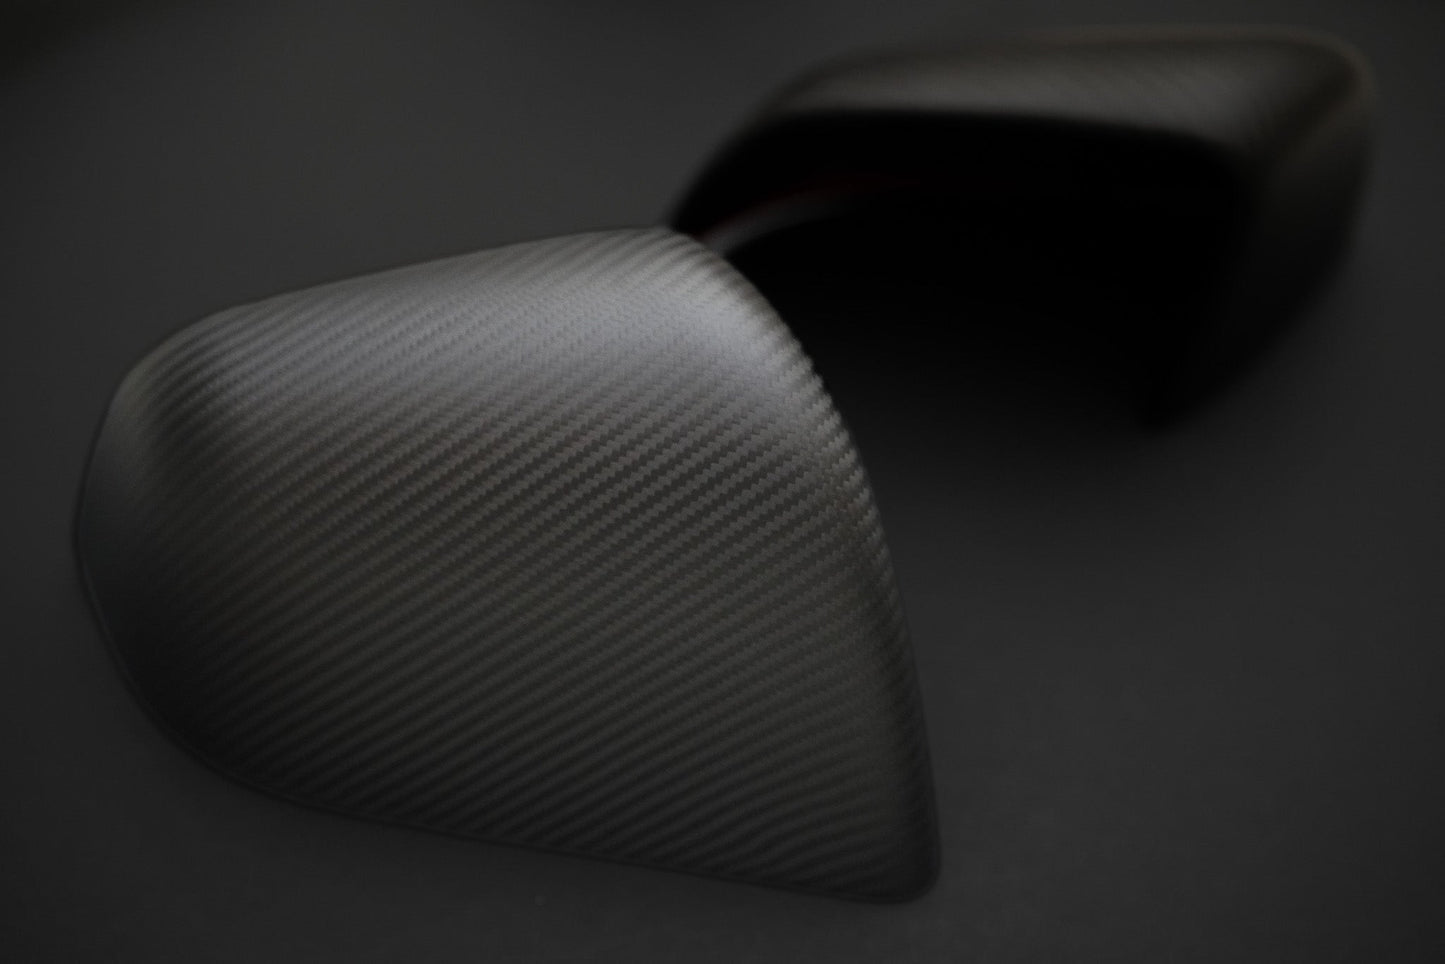 Tesla Model Y Real Carbon Fiber Side Mirror Caps Covers Gloss & Matte CF - iCBL